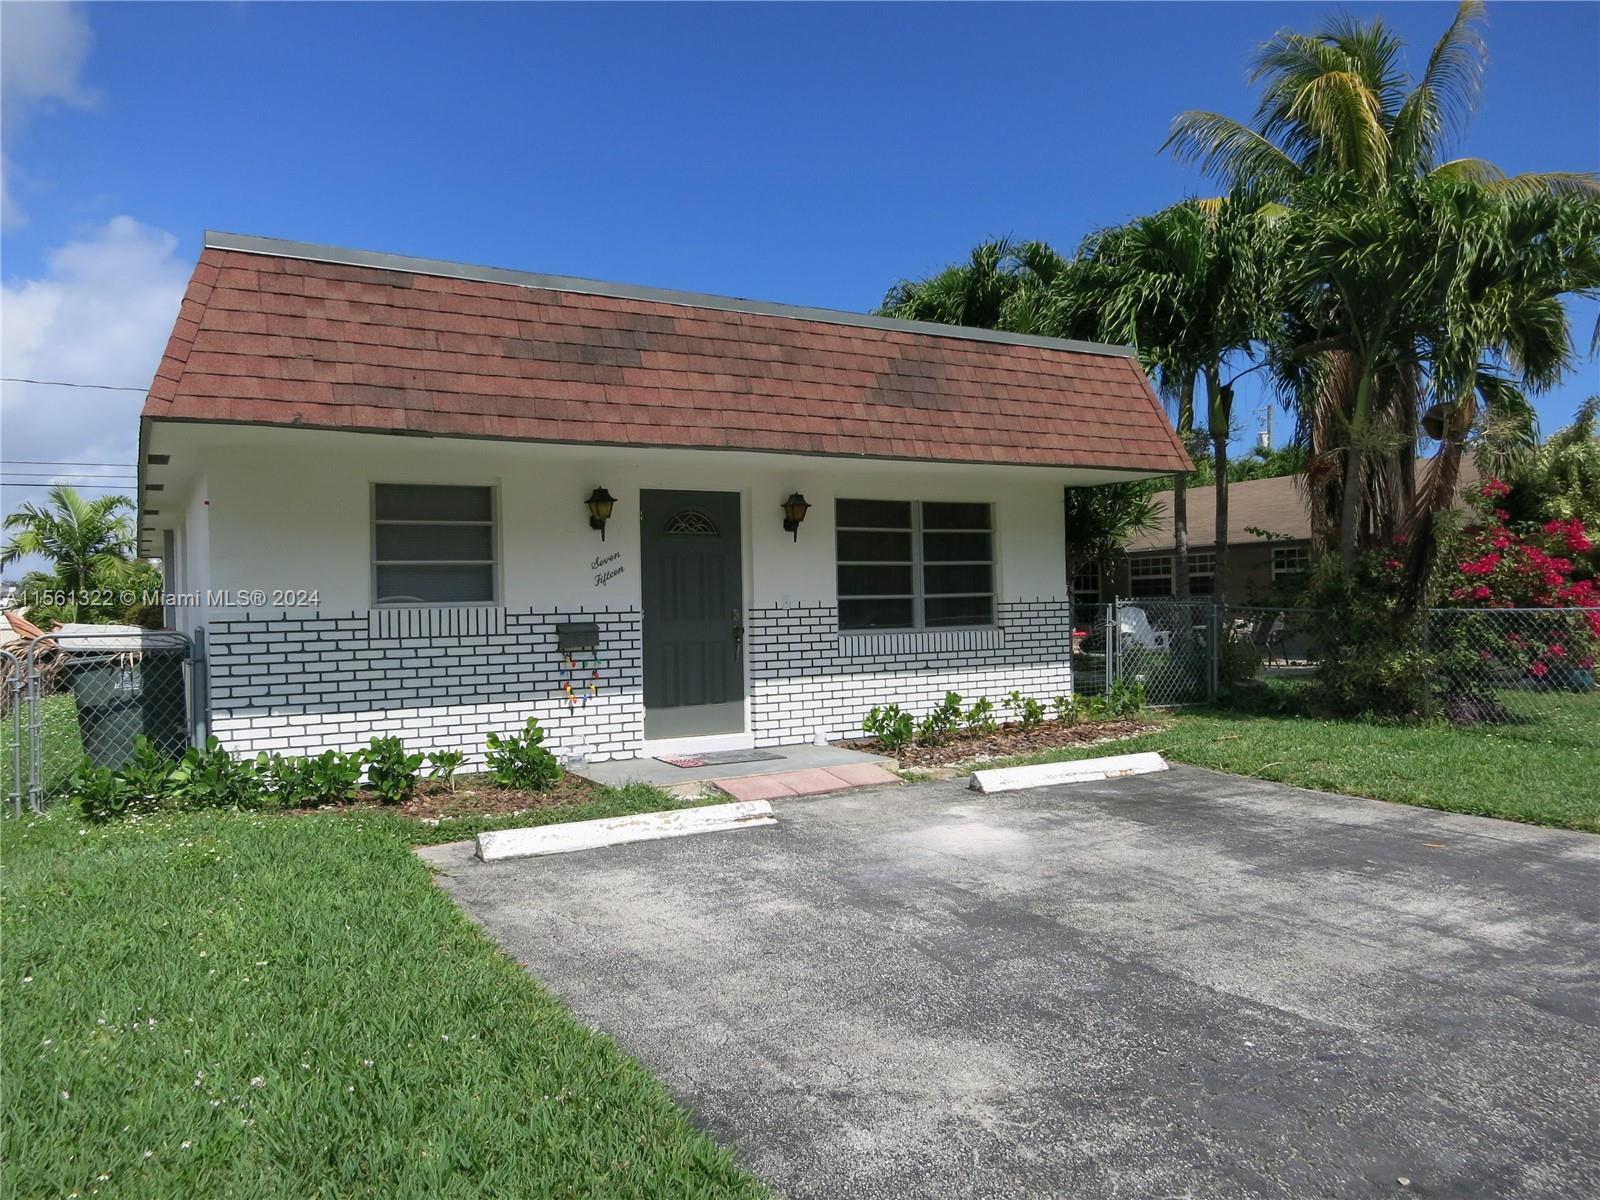 Property for Sale at 715 Ne 4th Ct Ct, Hallandale Beach, Broward County, Florida - Bedrooms: 2 
Bathrooms: 2  - $500,000